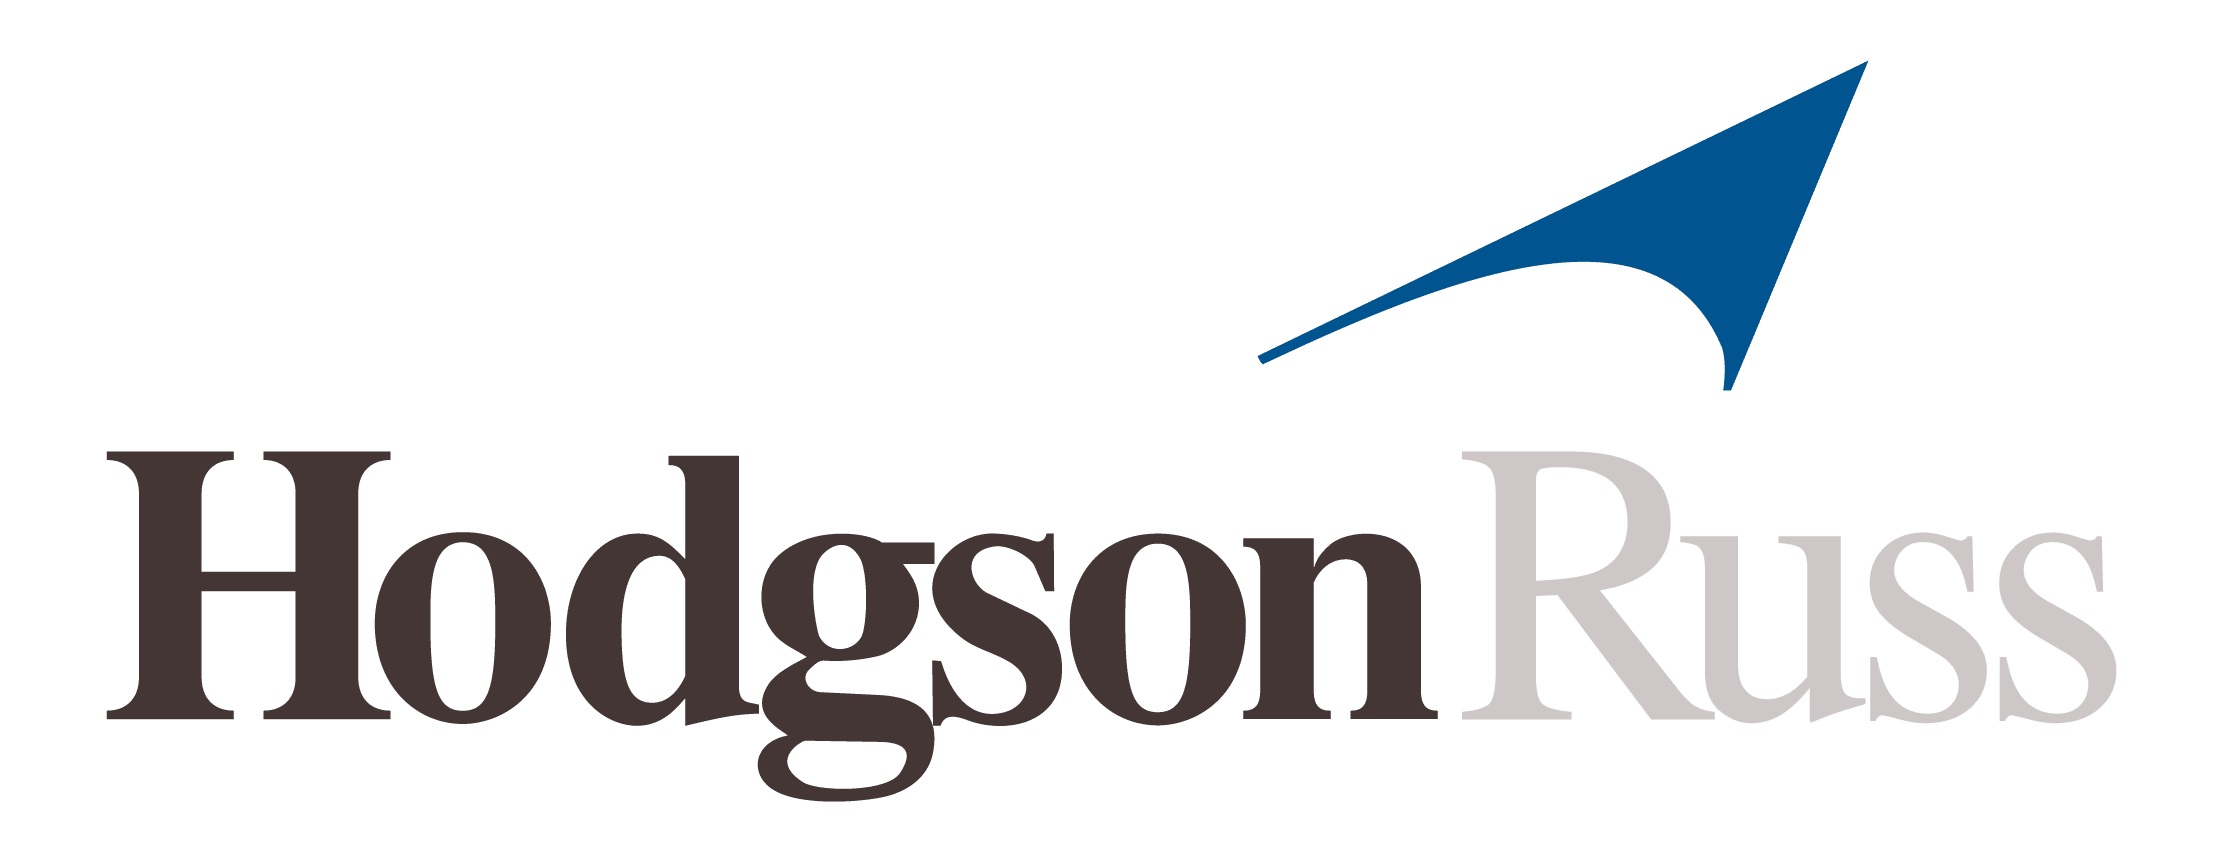 Corporate Sponsorship Page - hodgson russ logo